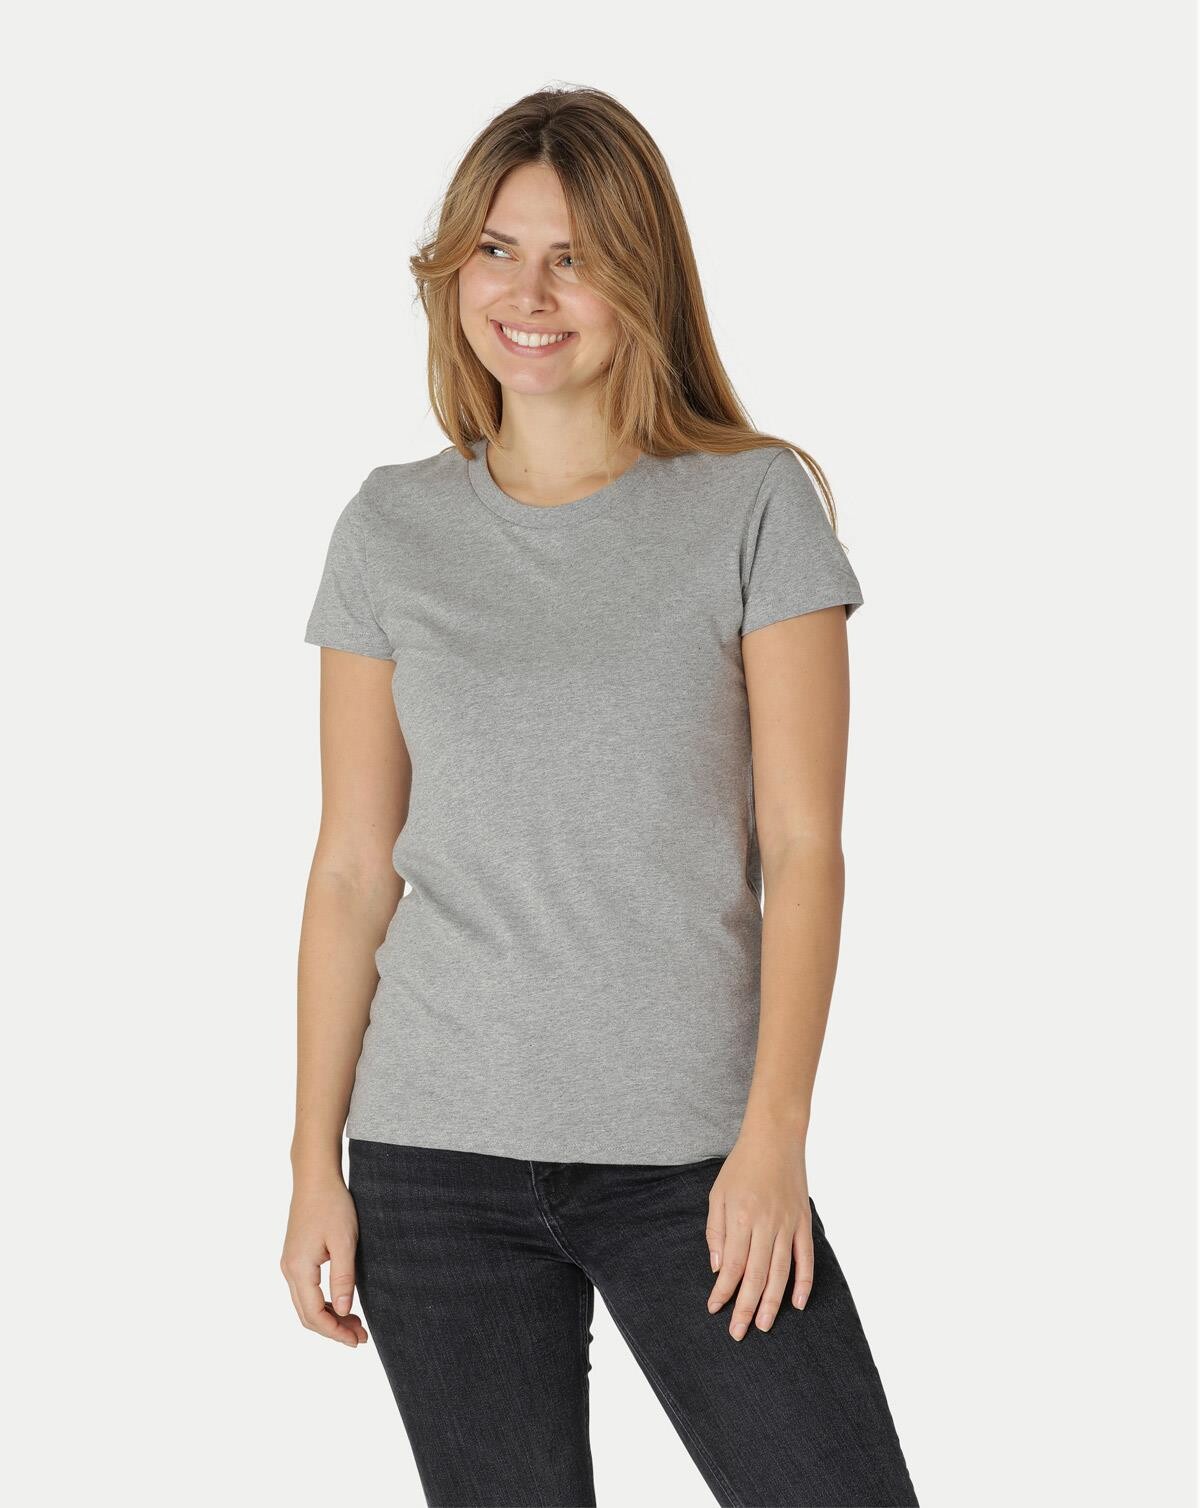 Neutral Økologisk Dame Tætsiddende T-Shirt (Grå Meleret, S)